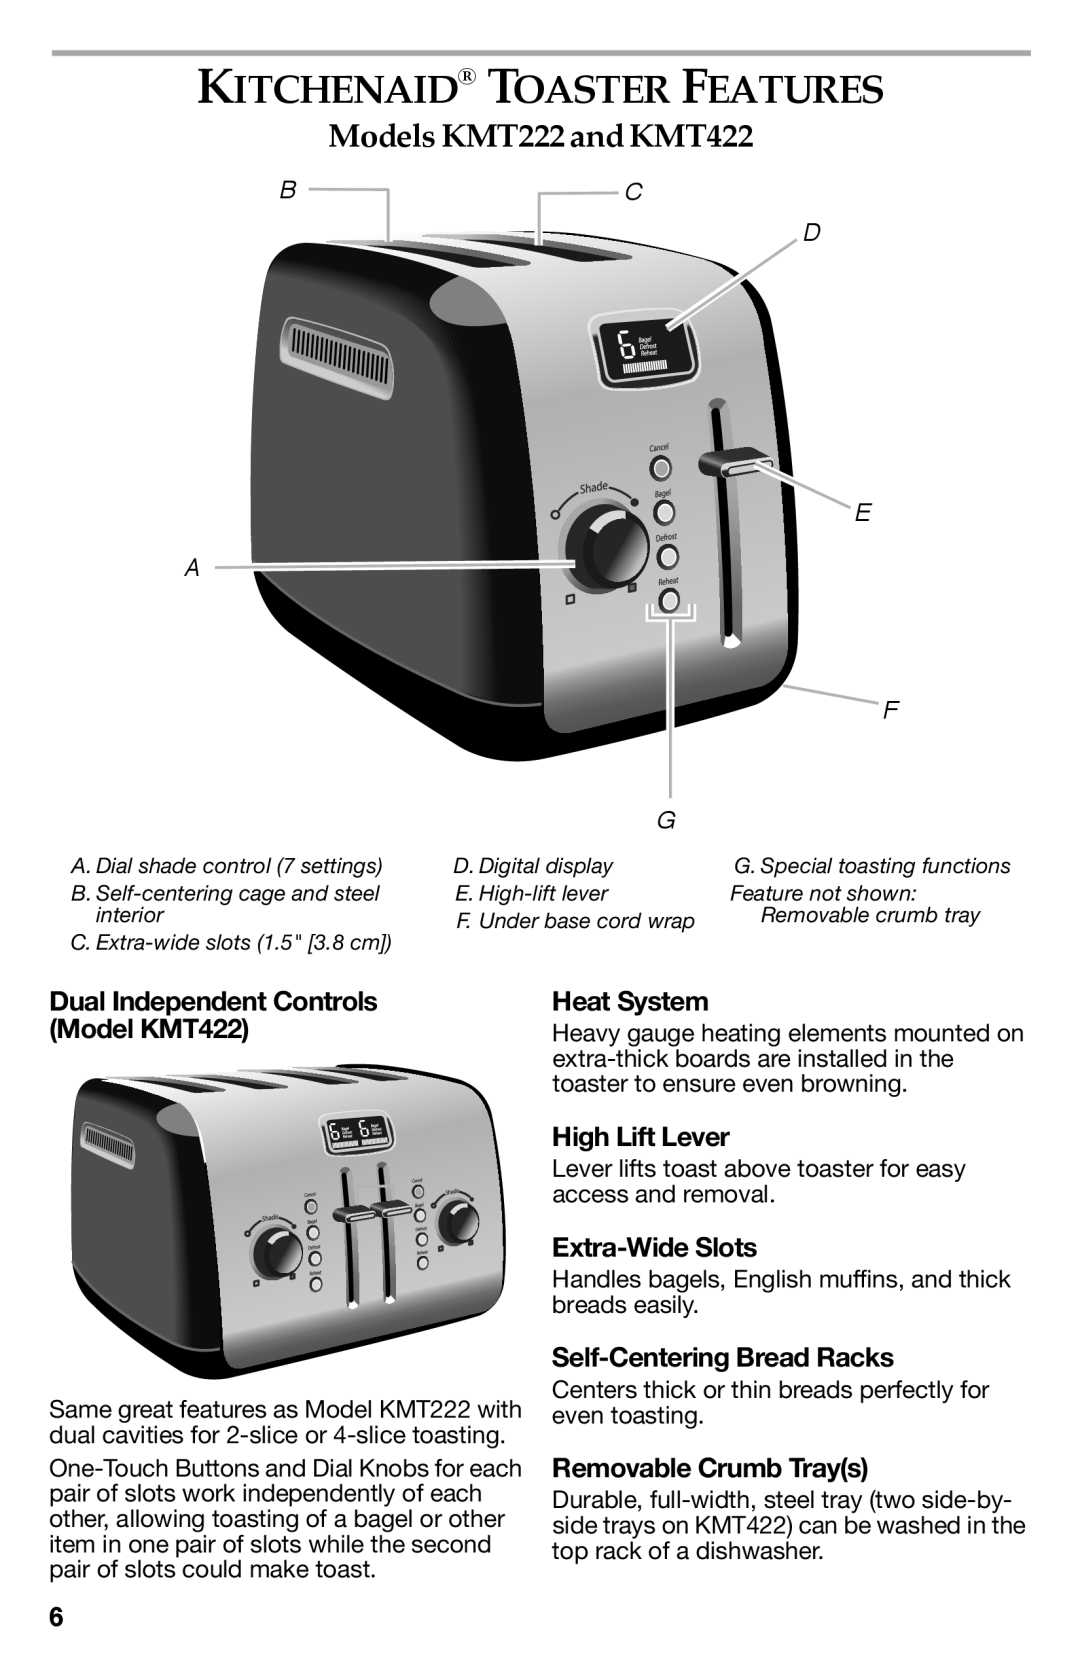 KitchenAid KMT223, KMT423OB Kitchenaid Toaster Features, Models KMT222 and KMT422, Dual Independent Controls Model KMT422 